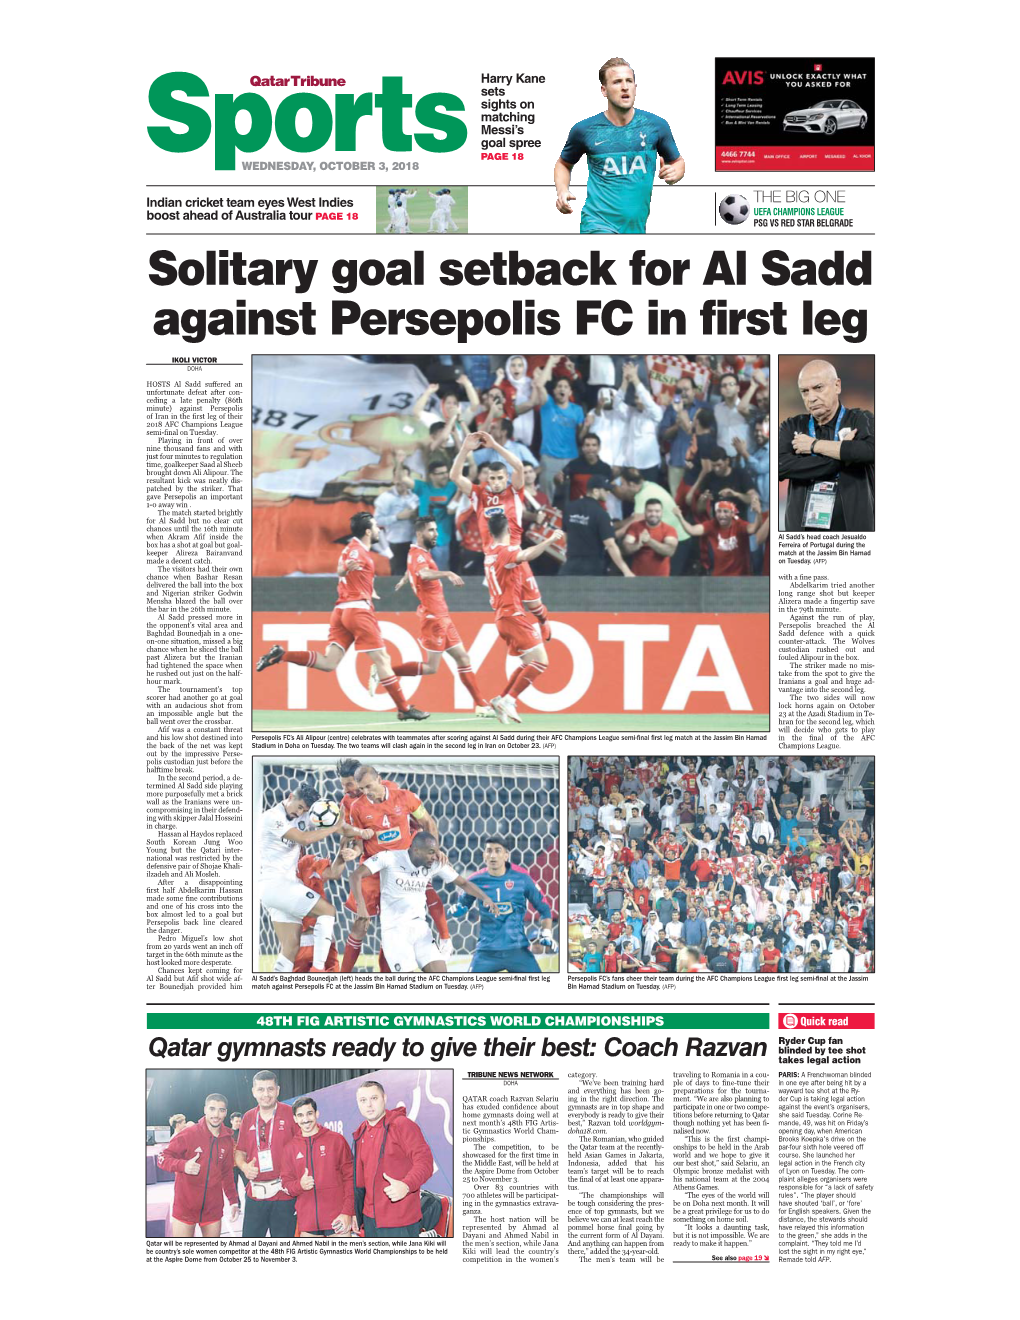 Solitary Goal Setback for Al Sadd Against Persepolis FC in First Leg